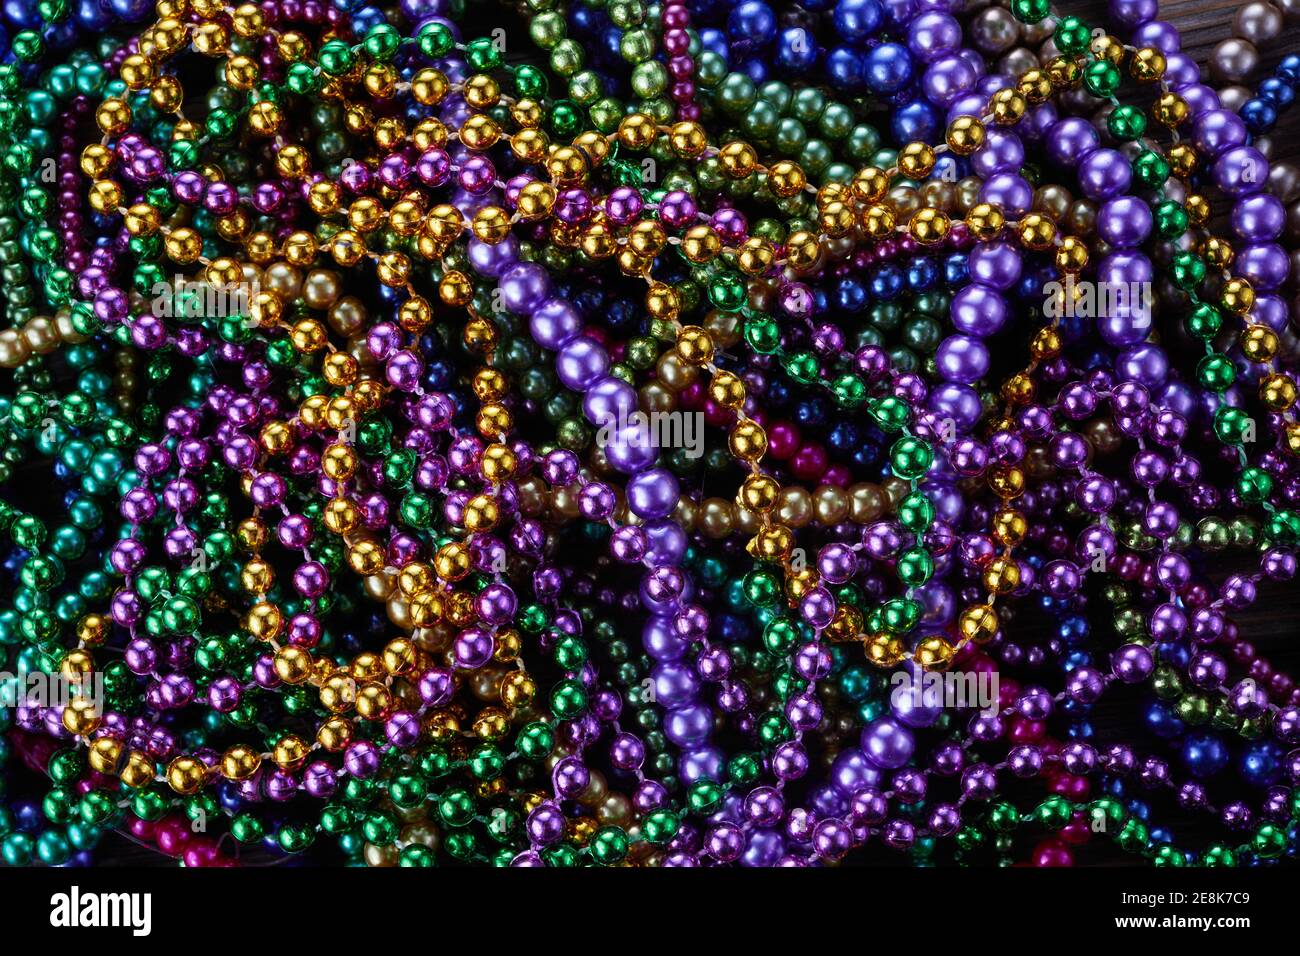 Colorful Mardi gras beads background. Green, purple and gold Merdi